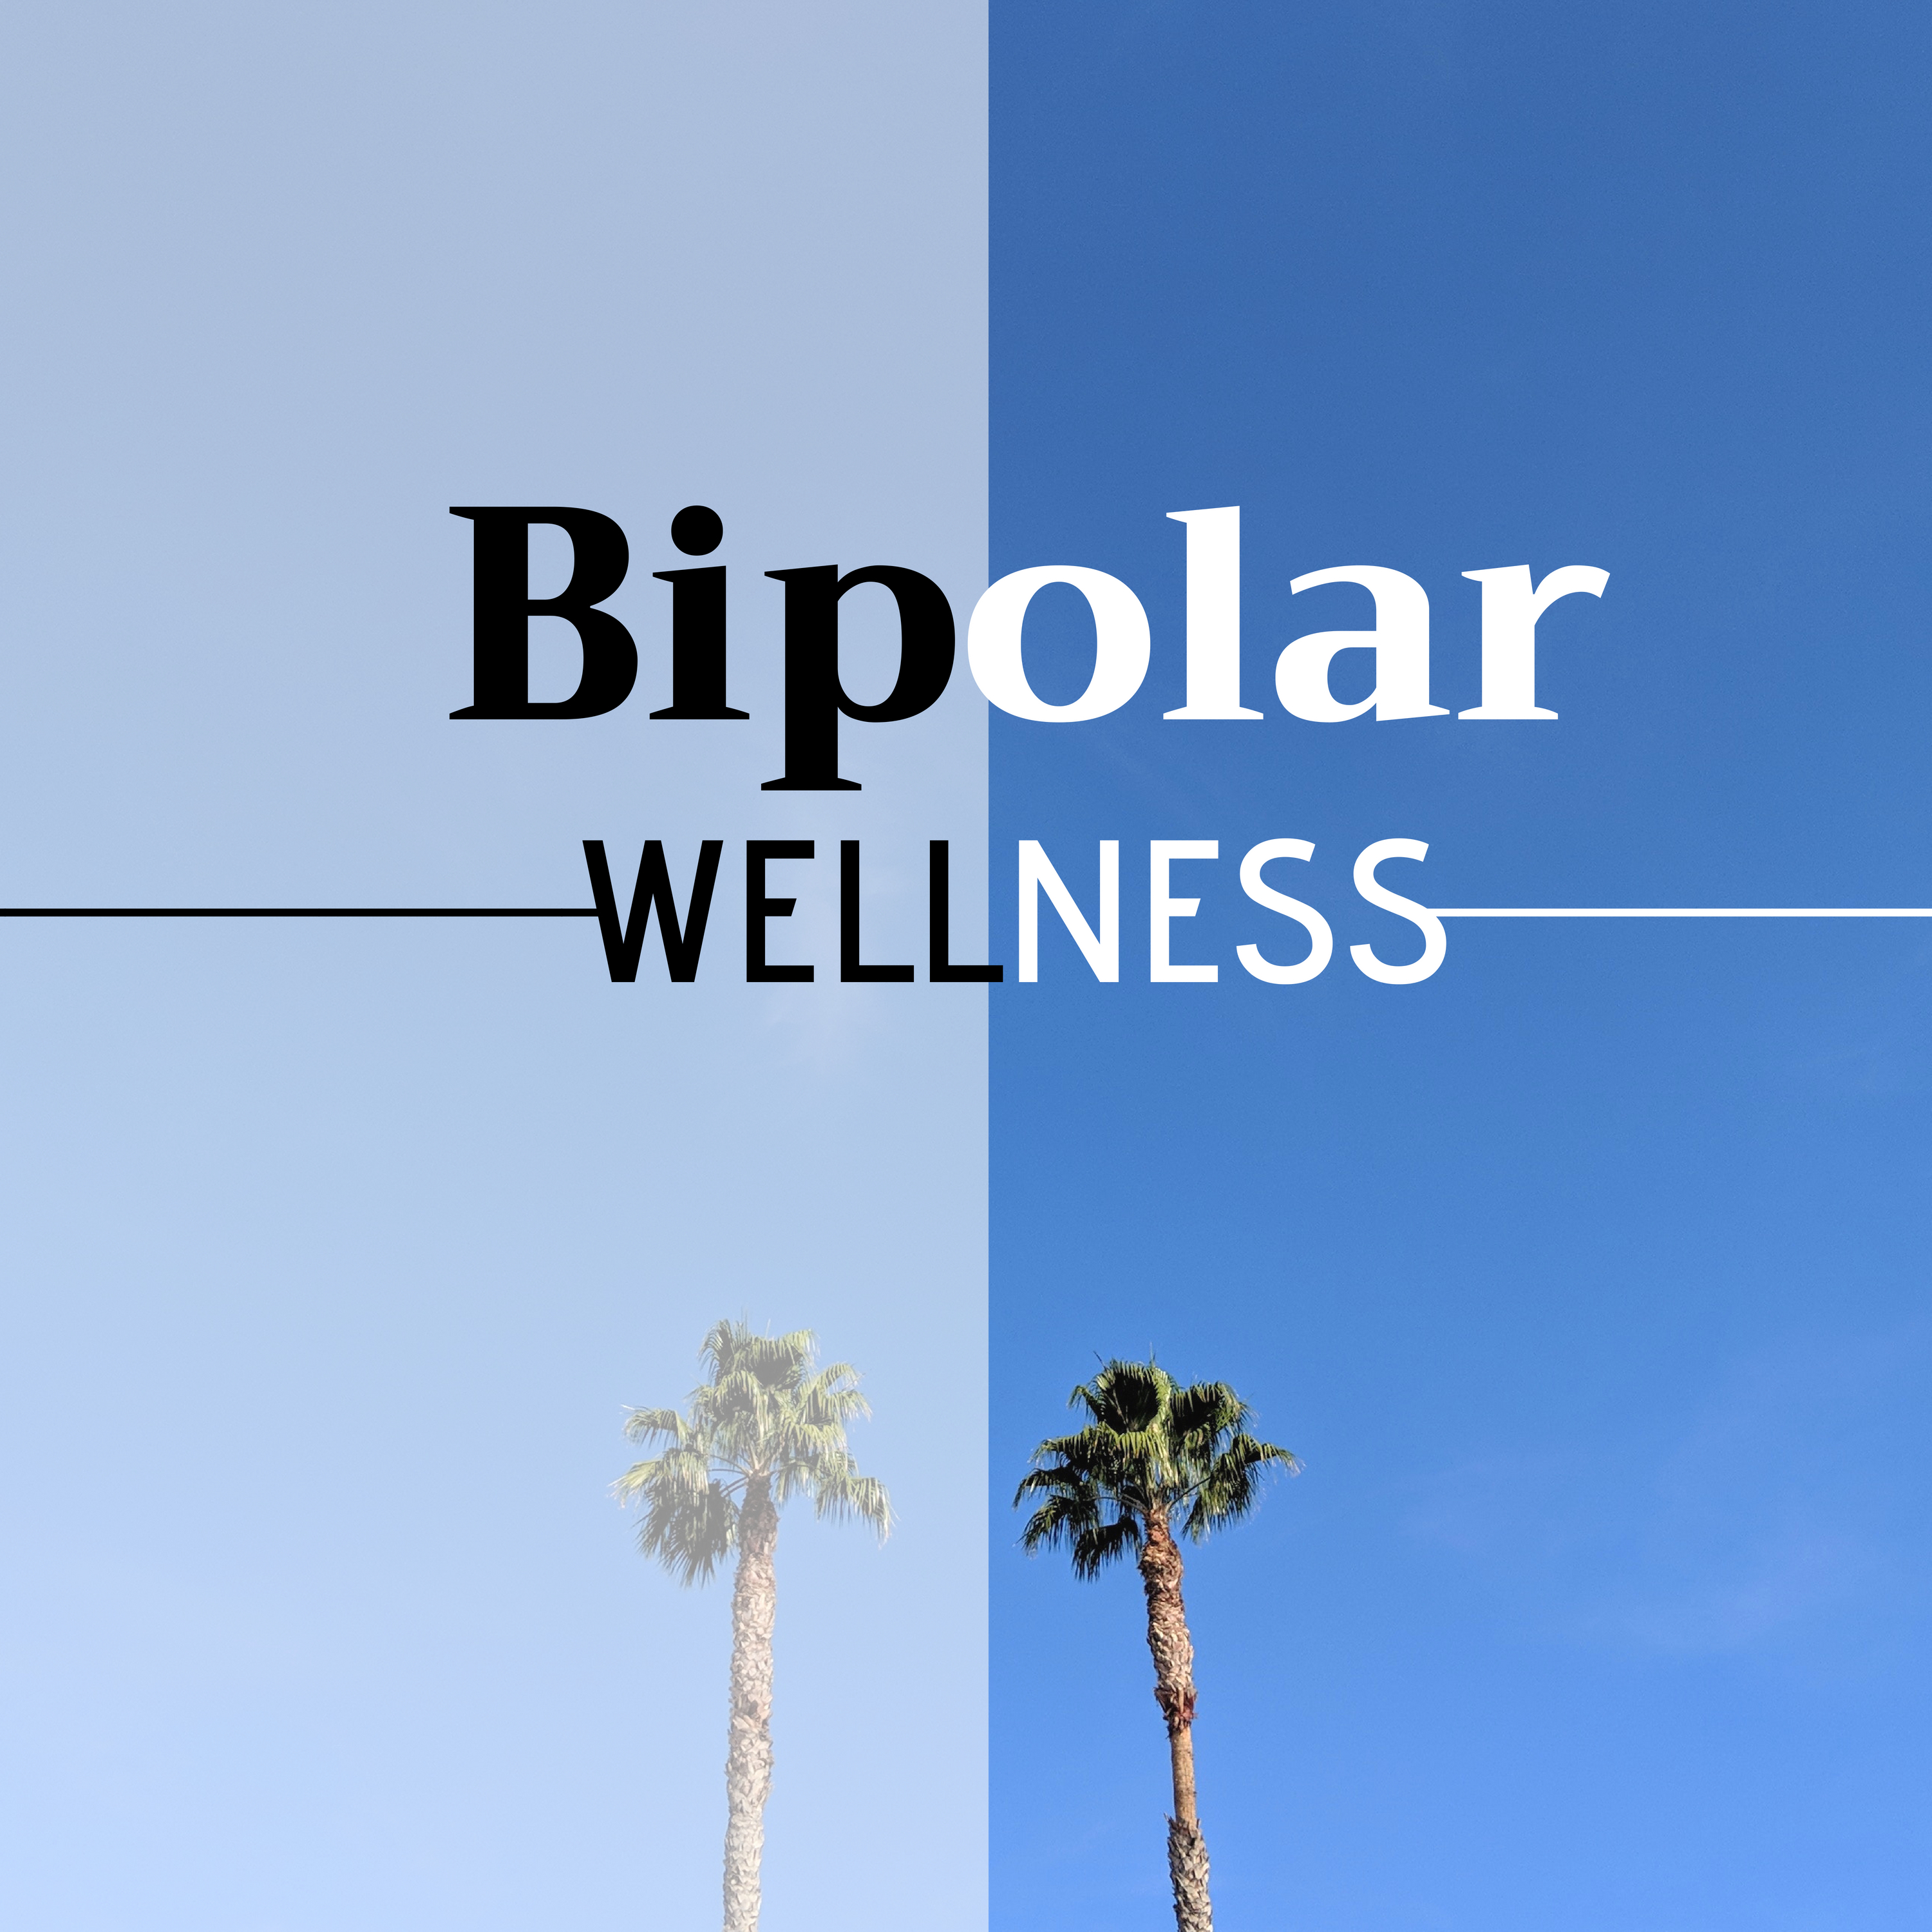 Bipolar Wellness